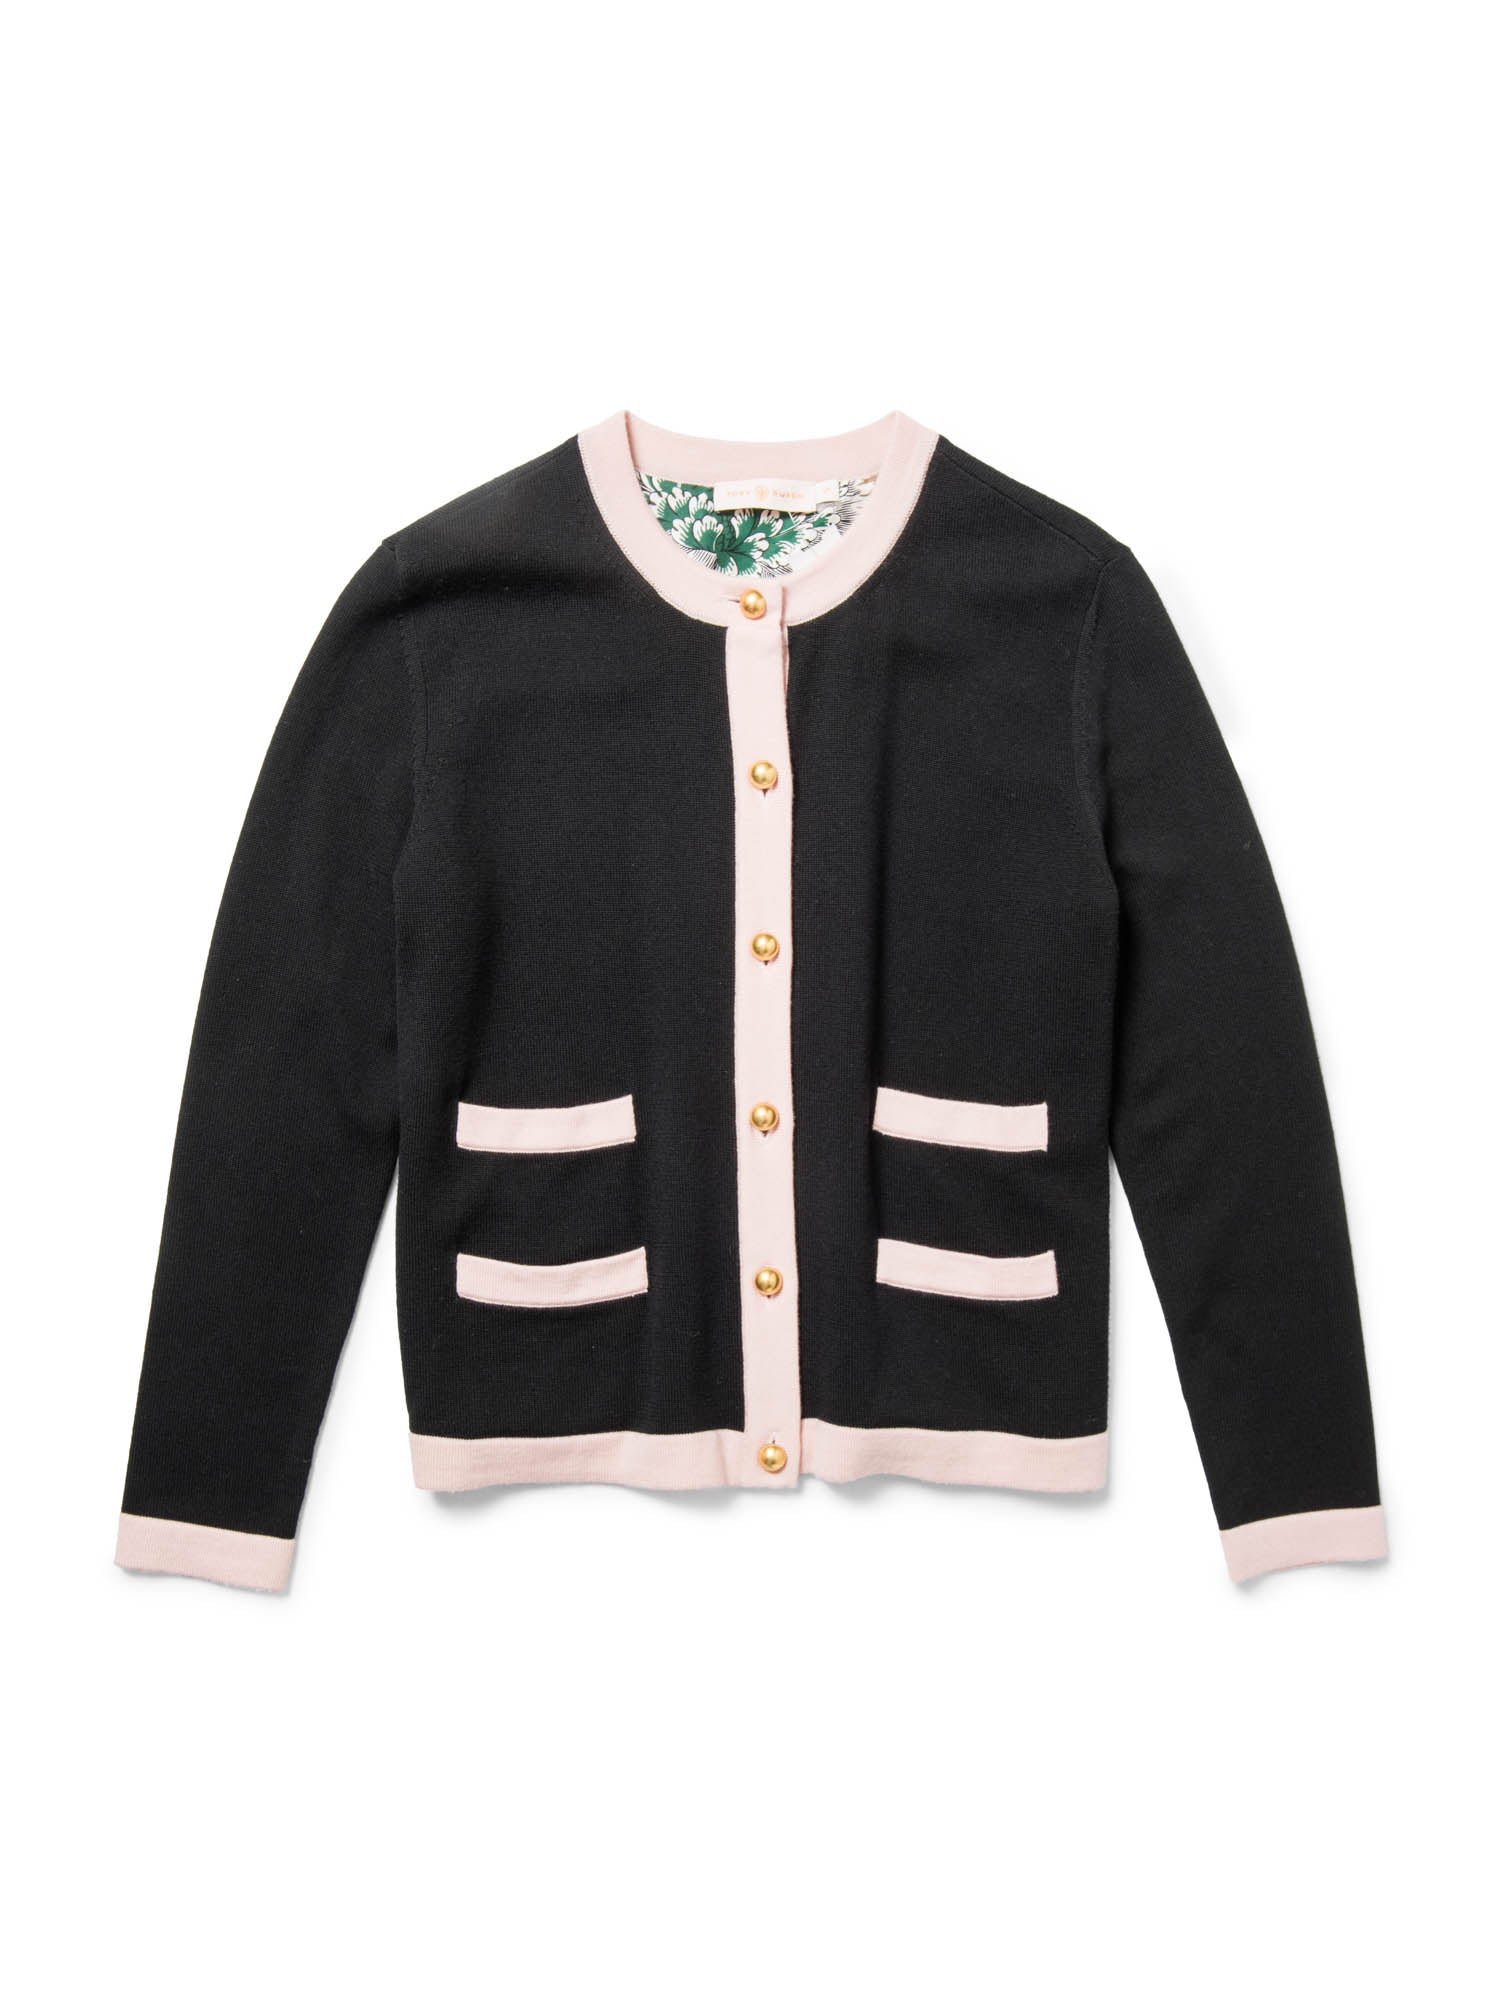 Tory Burch Silk Wool Knit Cardigan Black Pink Gold-designer resale